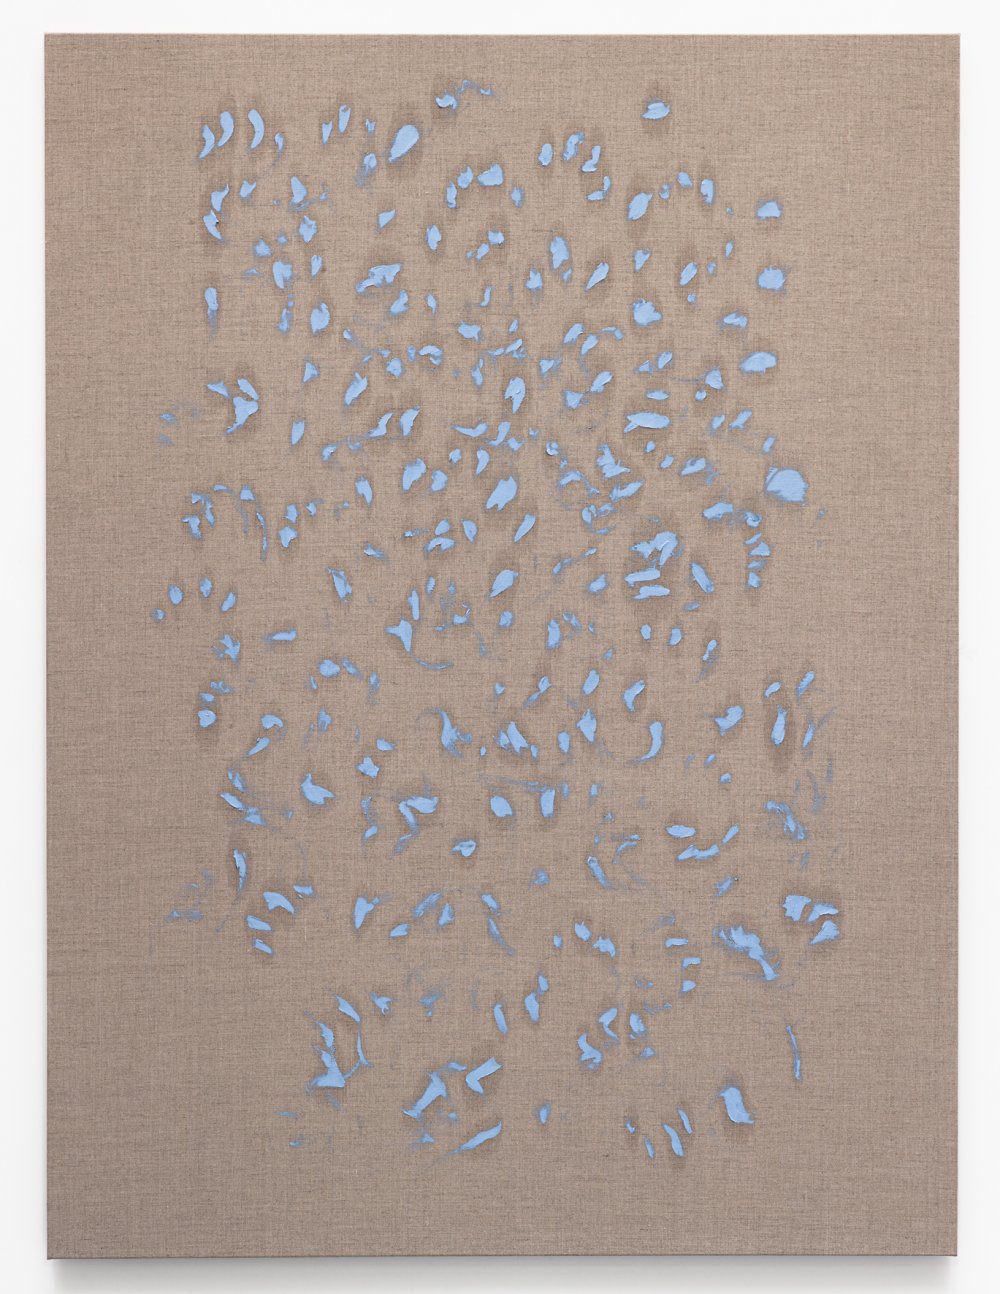 Donna Huanca, ‘Finger painting (Lapiz azul)’ (2015). Install view. Courtesy Valentin, Paris.